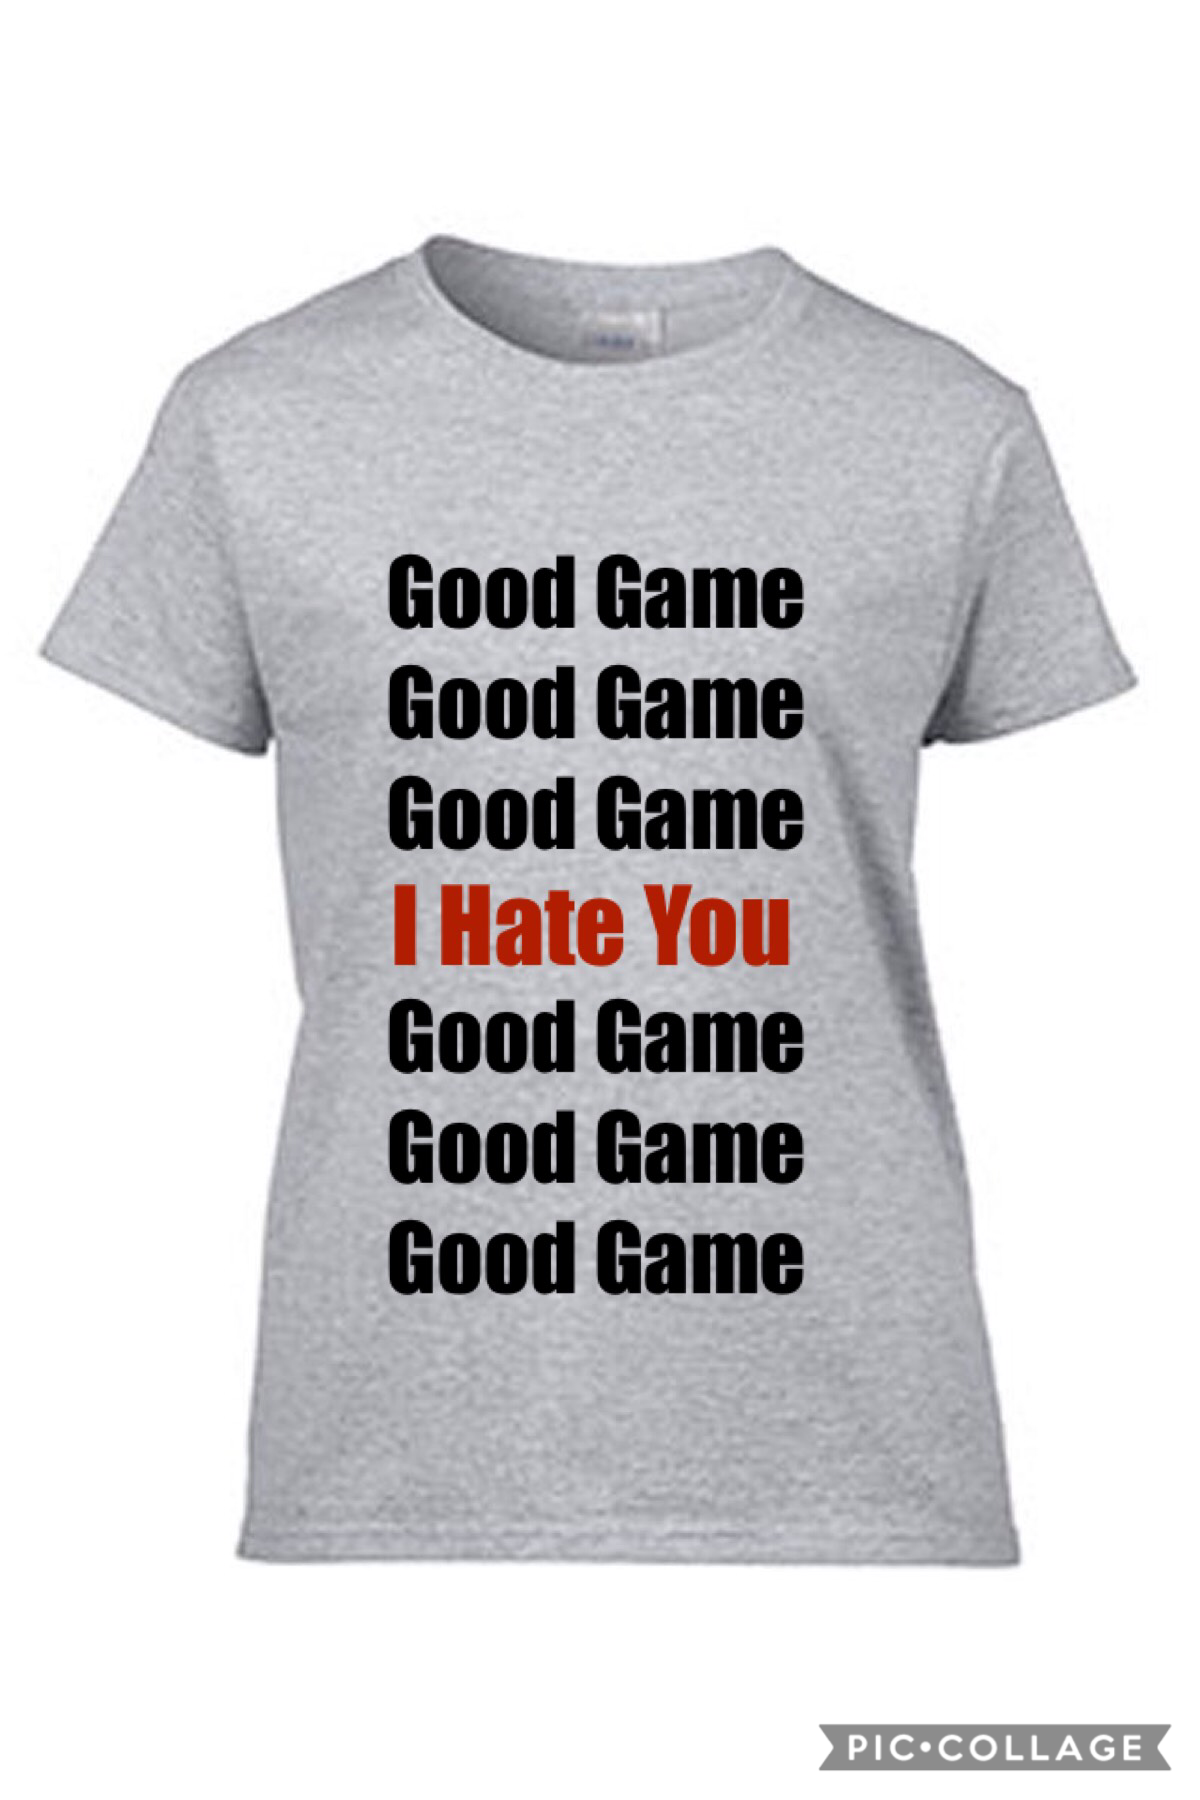 
New || Good Game I hate you tee